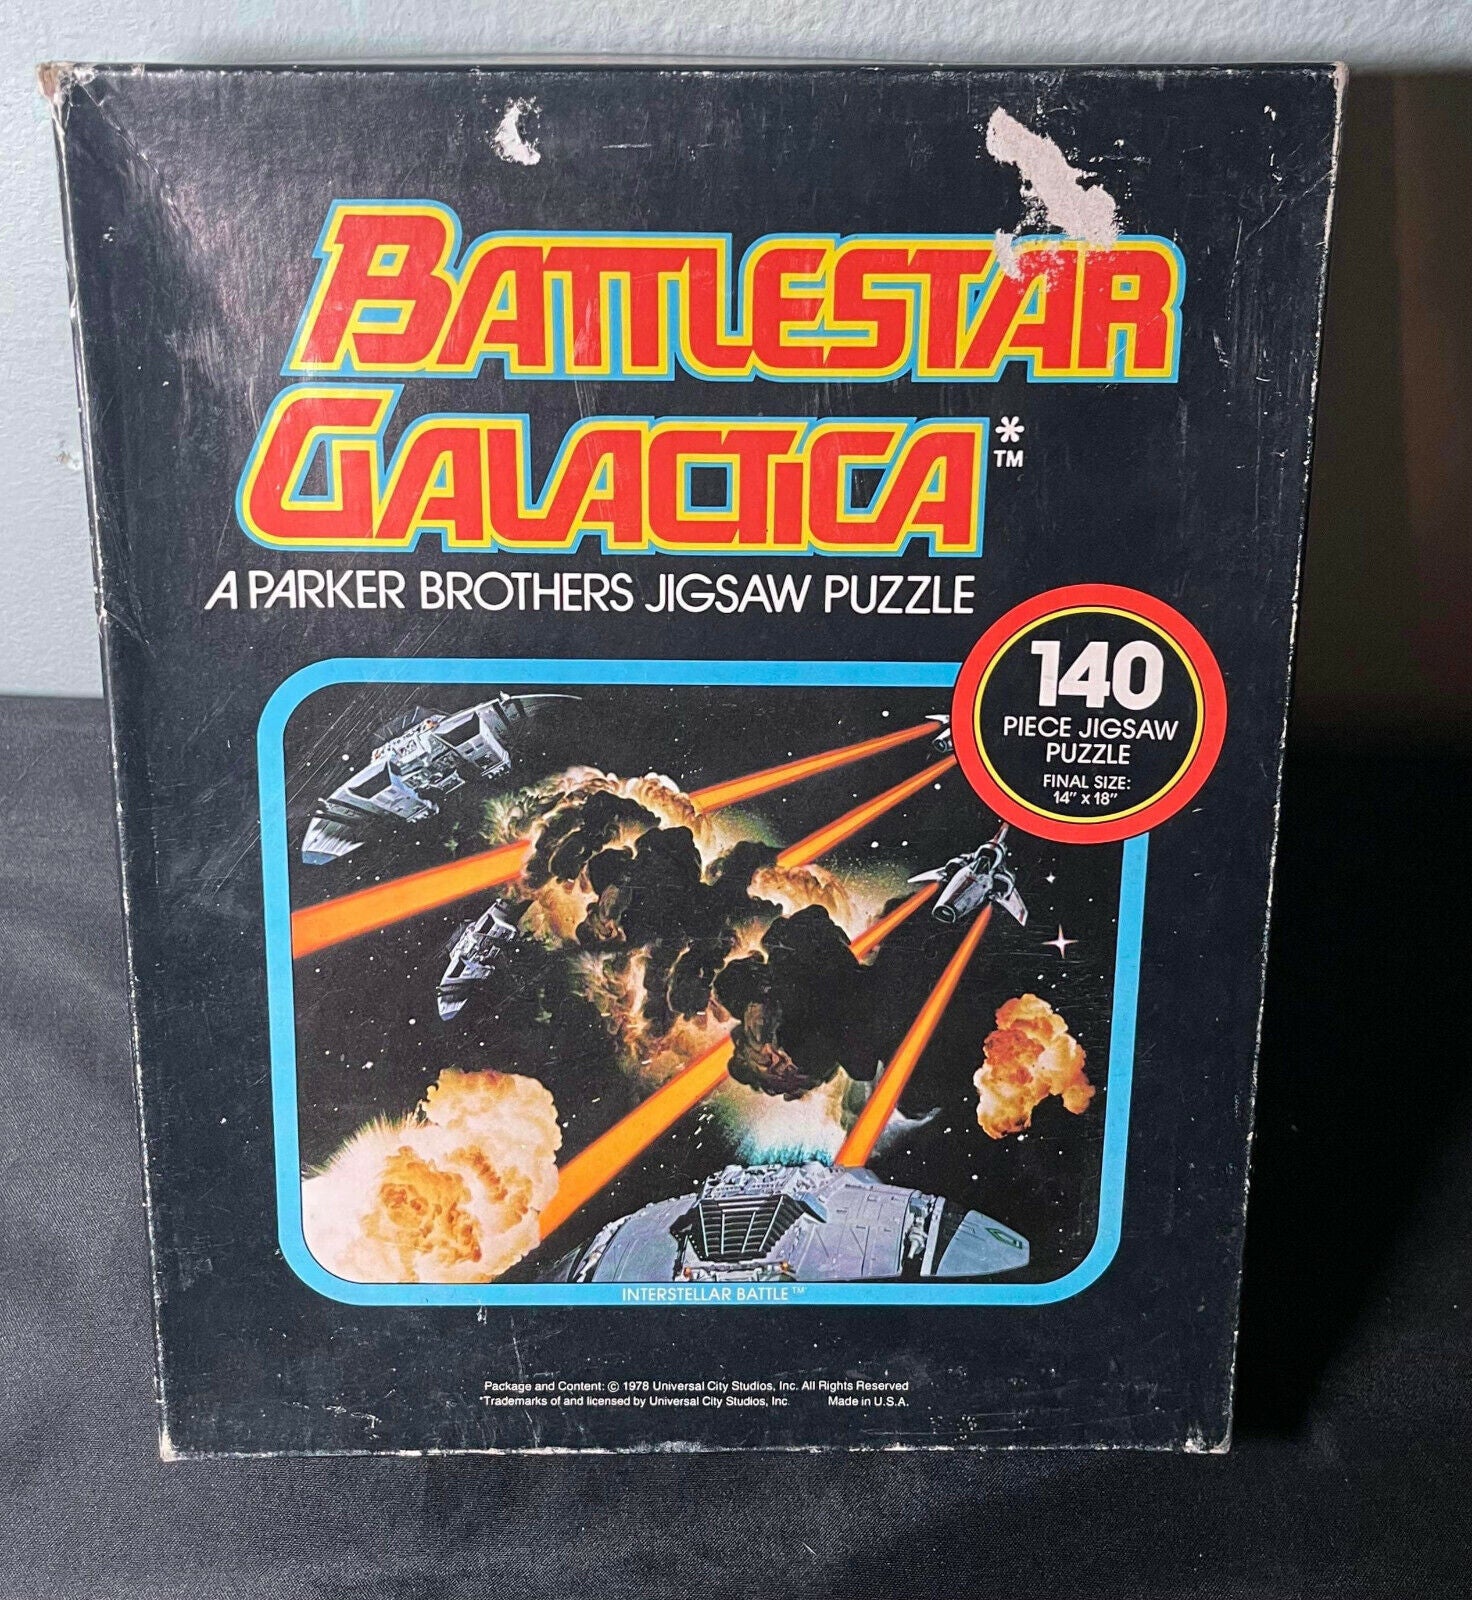 Vintage 1978 Parker Brothers Battlestar Galactica Interstellar Battle Puzzle 140